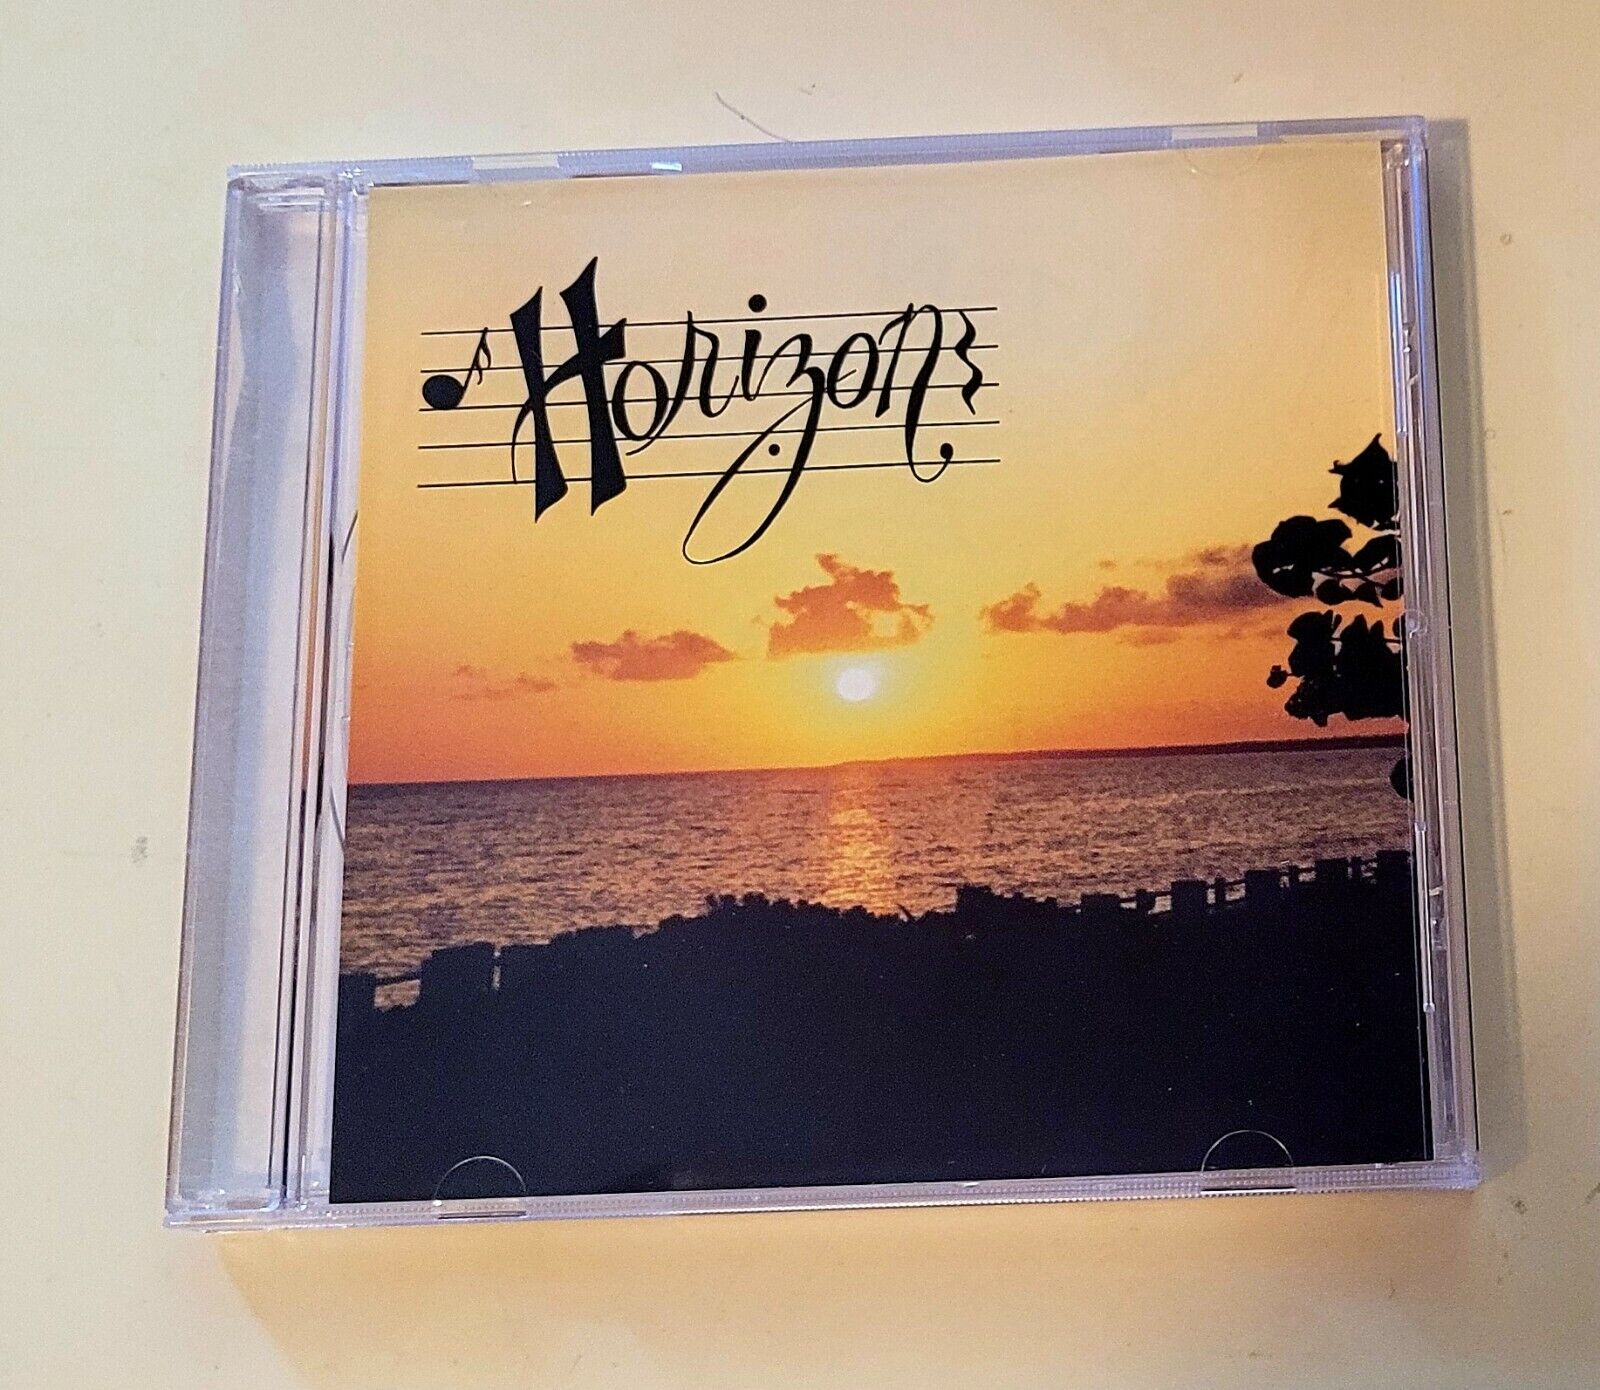 Horizon CD, 1996, Home For The Holidays, Island Dream, Swing Engine, p.